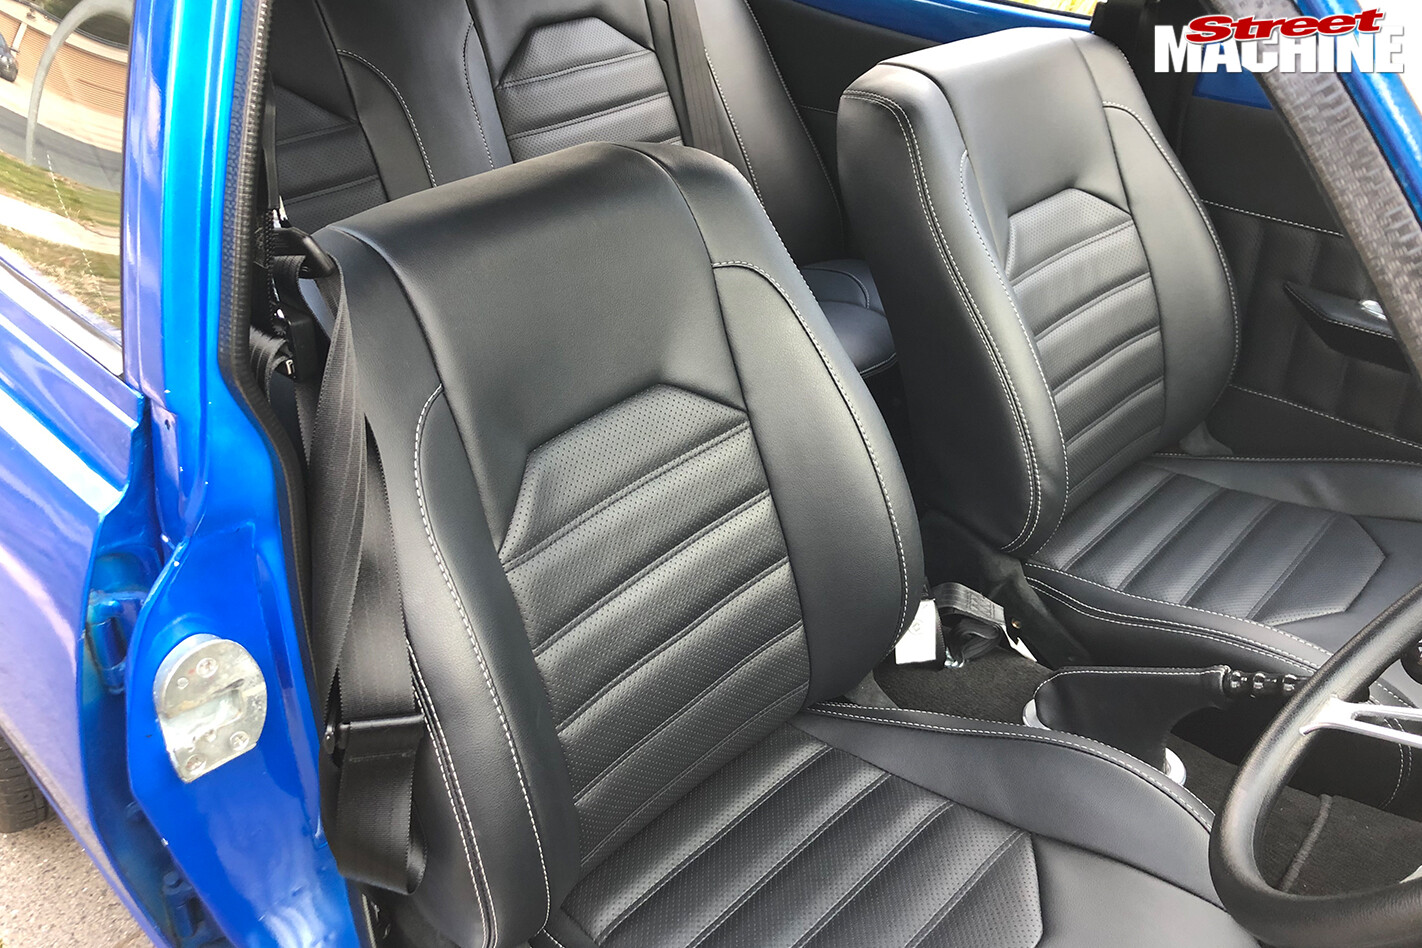 Holden LC Torana seats